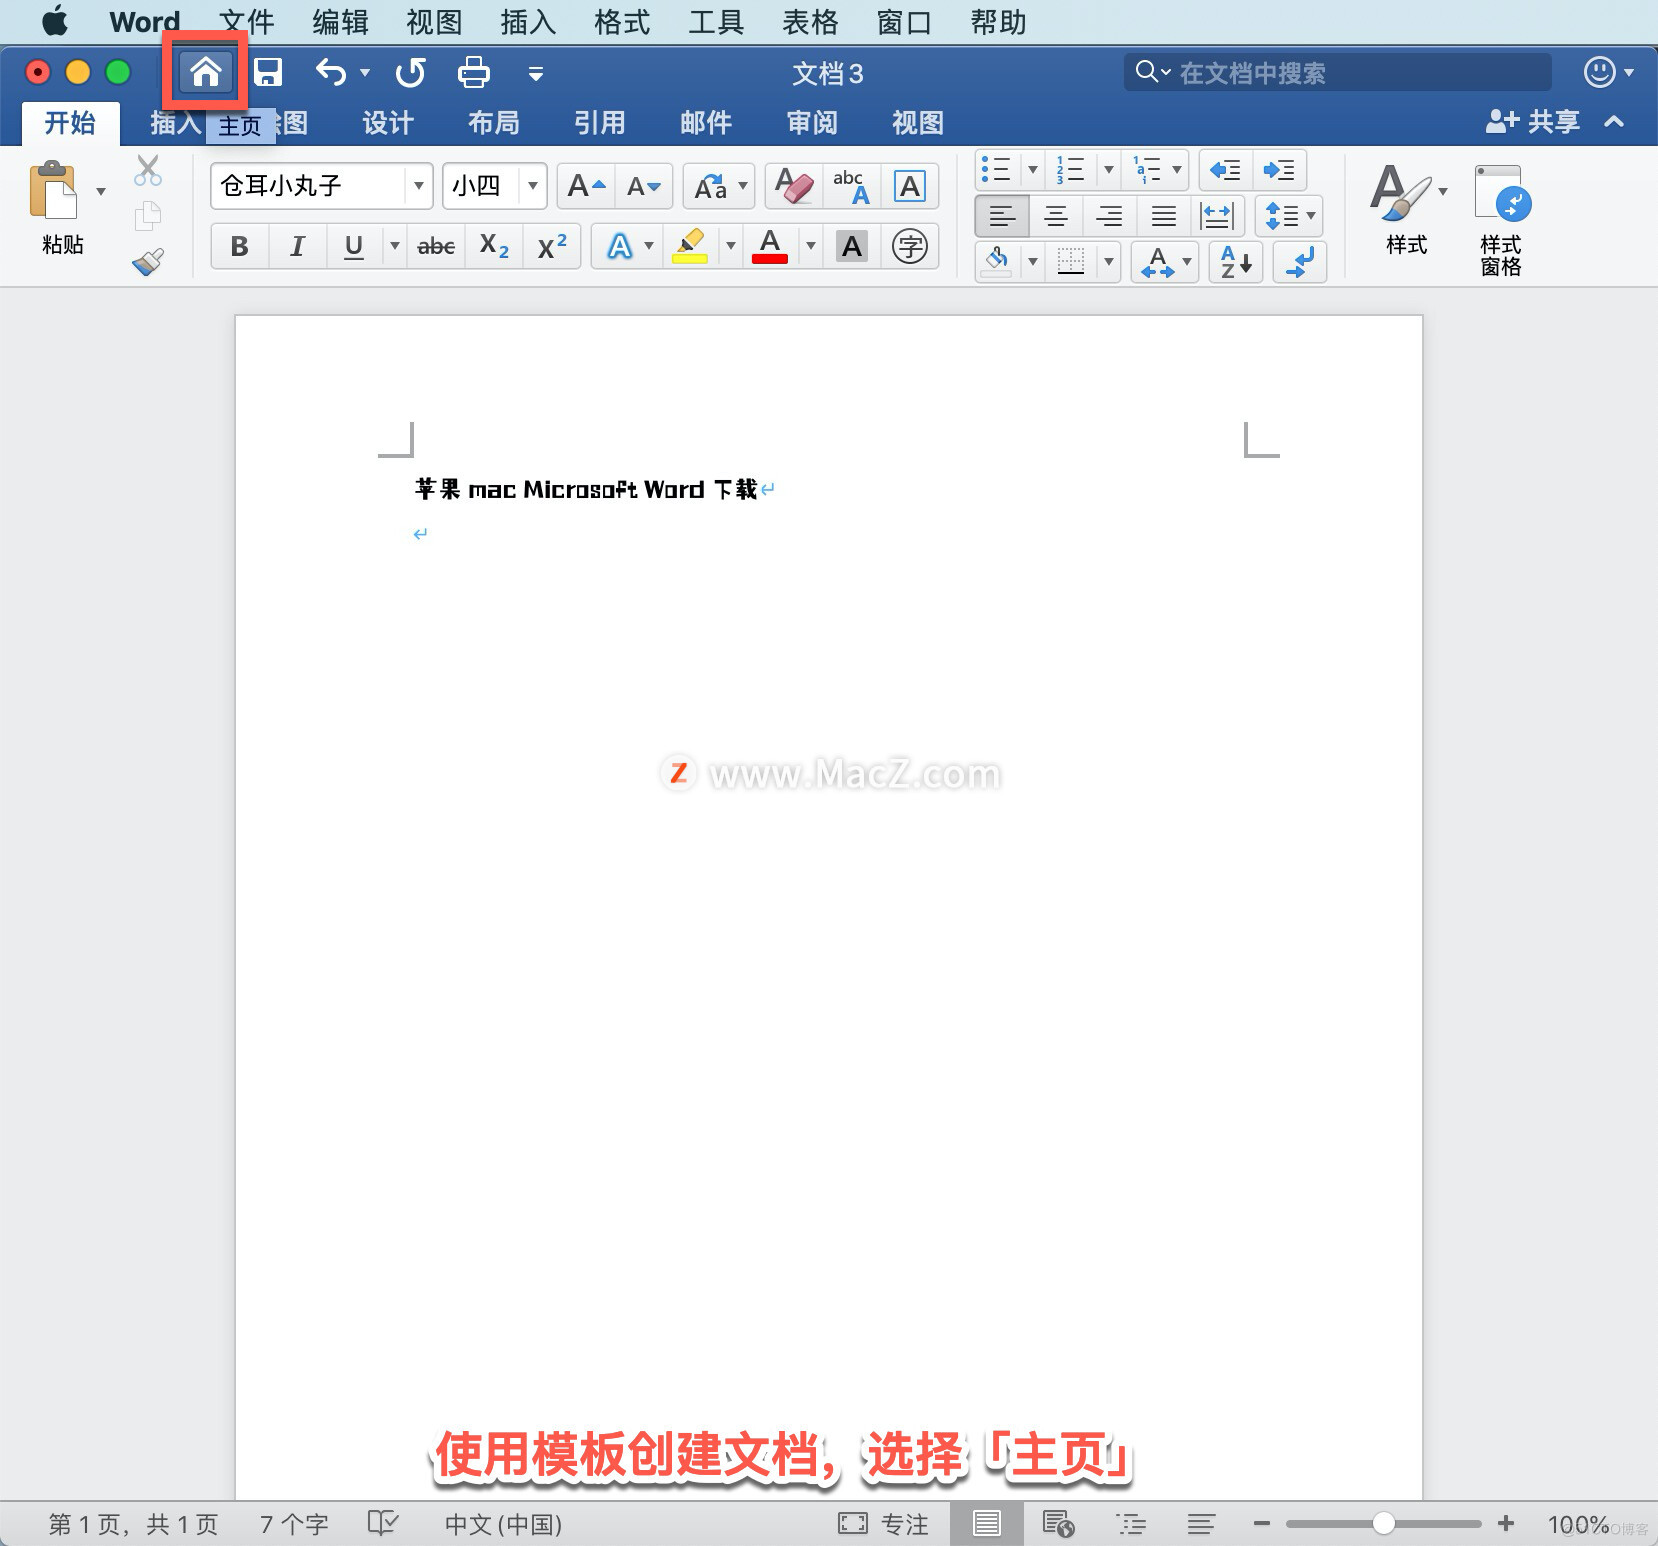 Microsoft Word教程「1」，如何在 Word 中创建文档、添加和编辑文本？_字体颜色_03